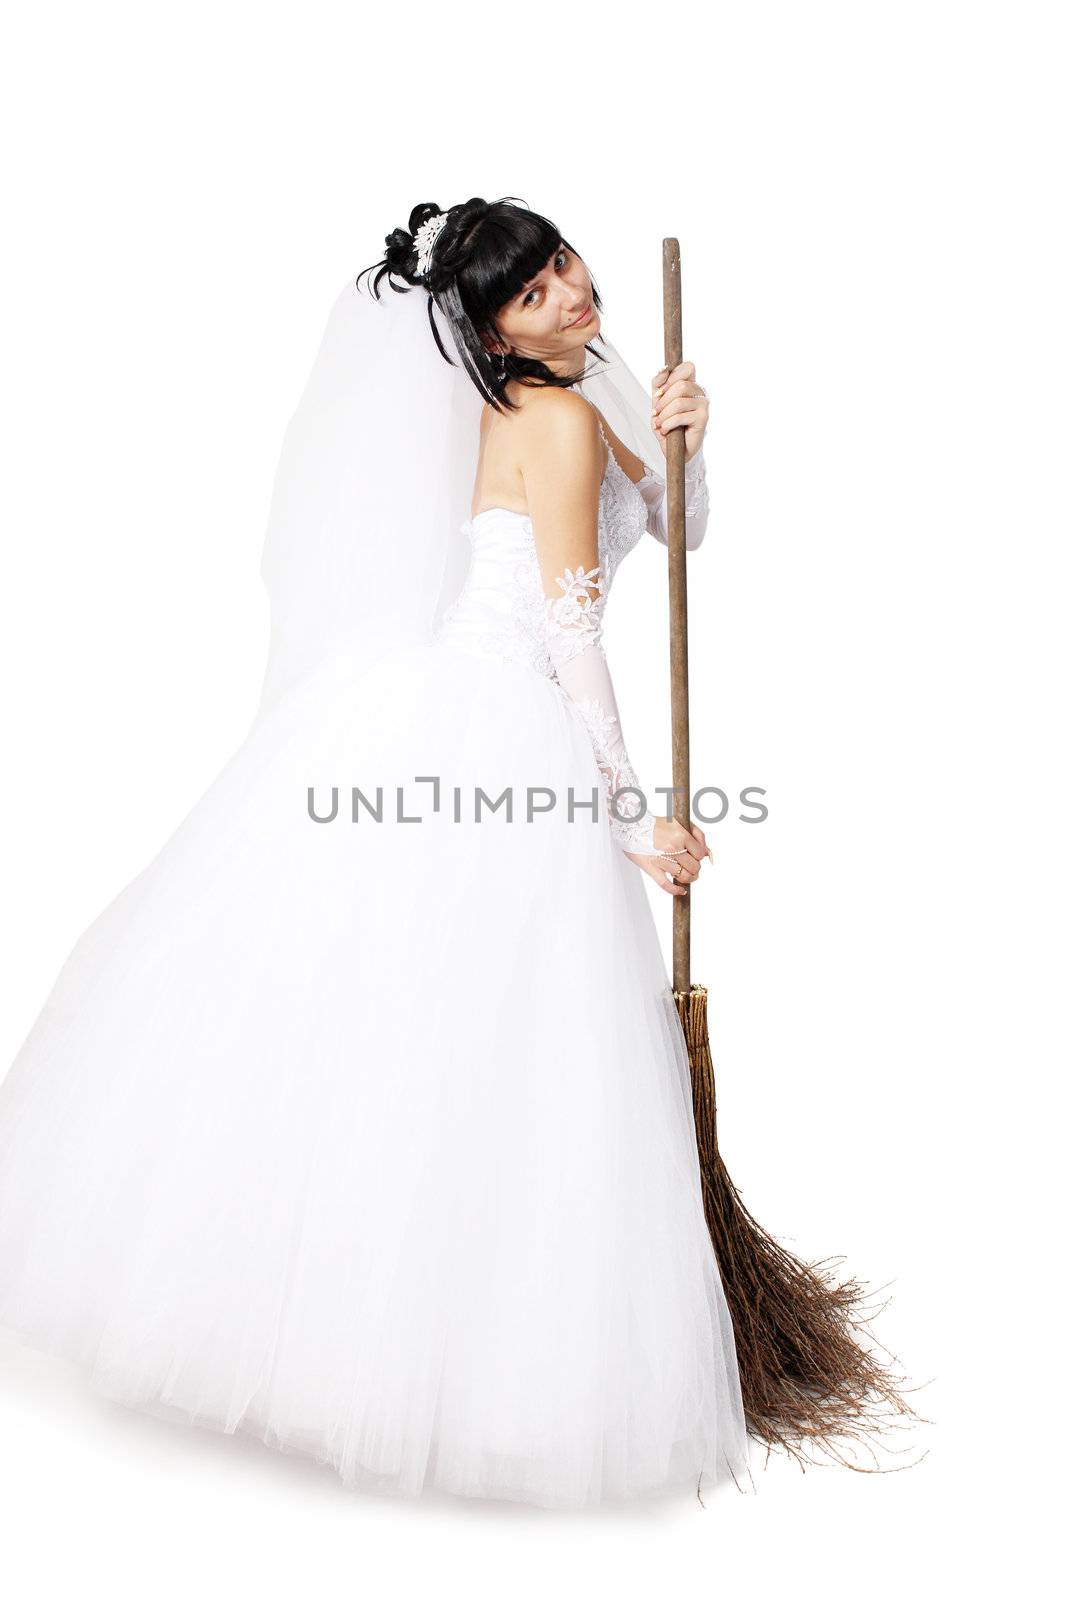 bride in white wedding dress on a broom by aptyp_kok